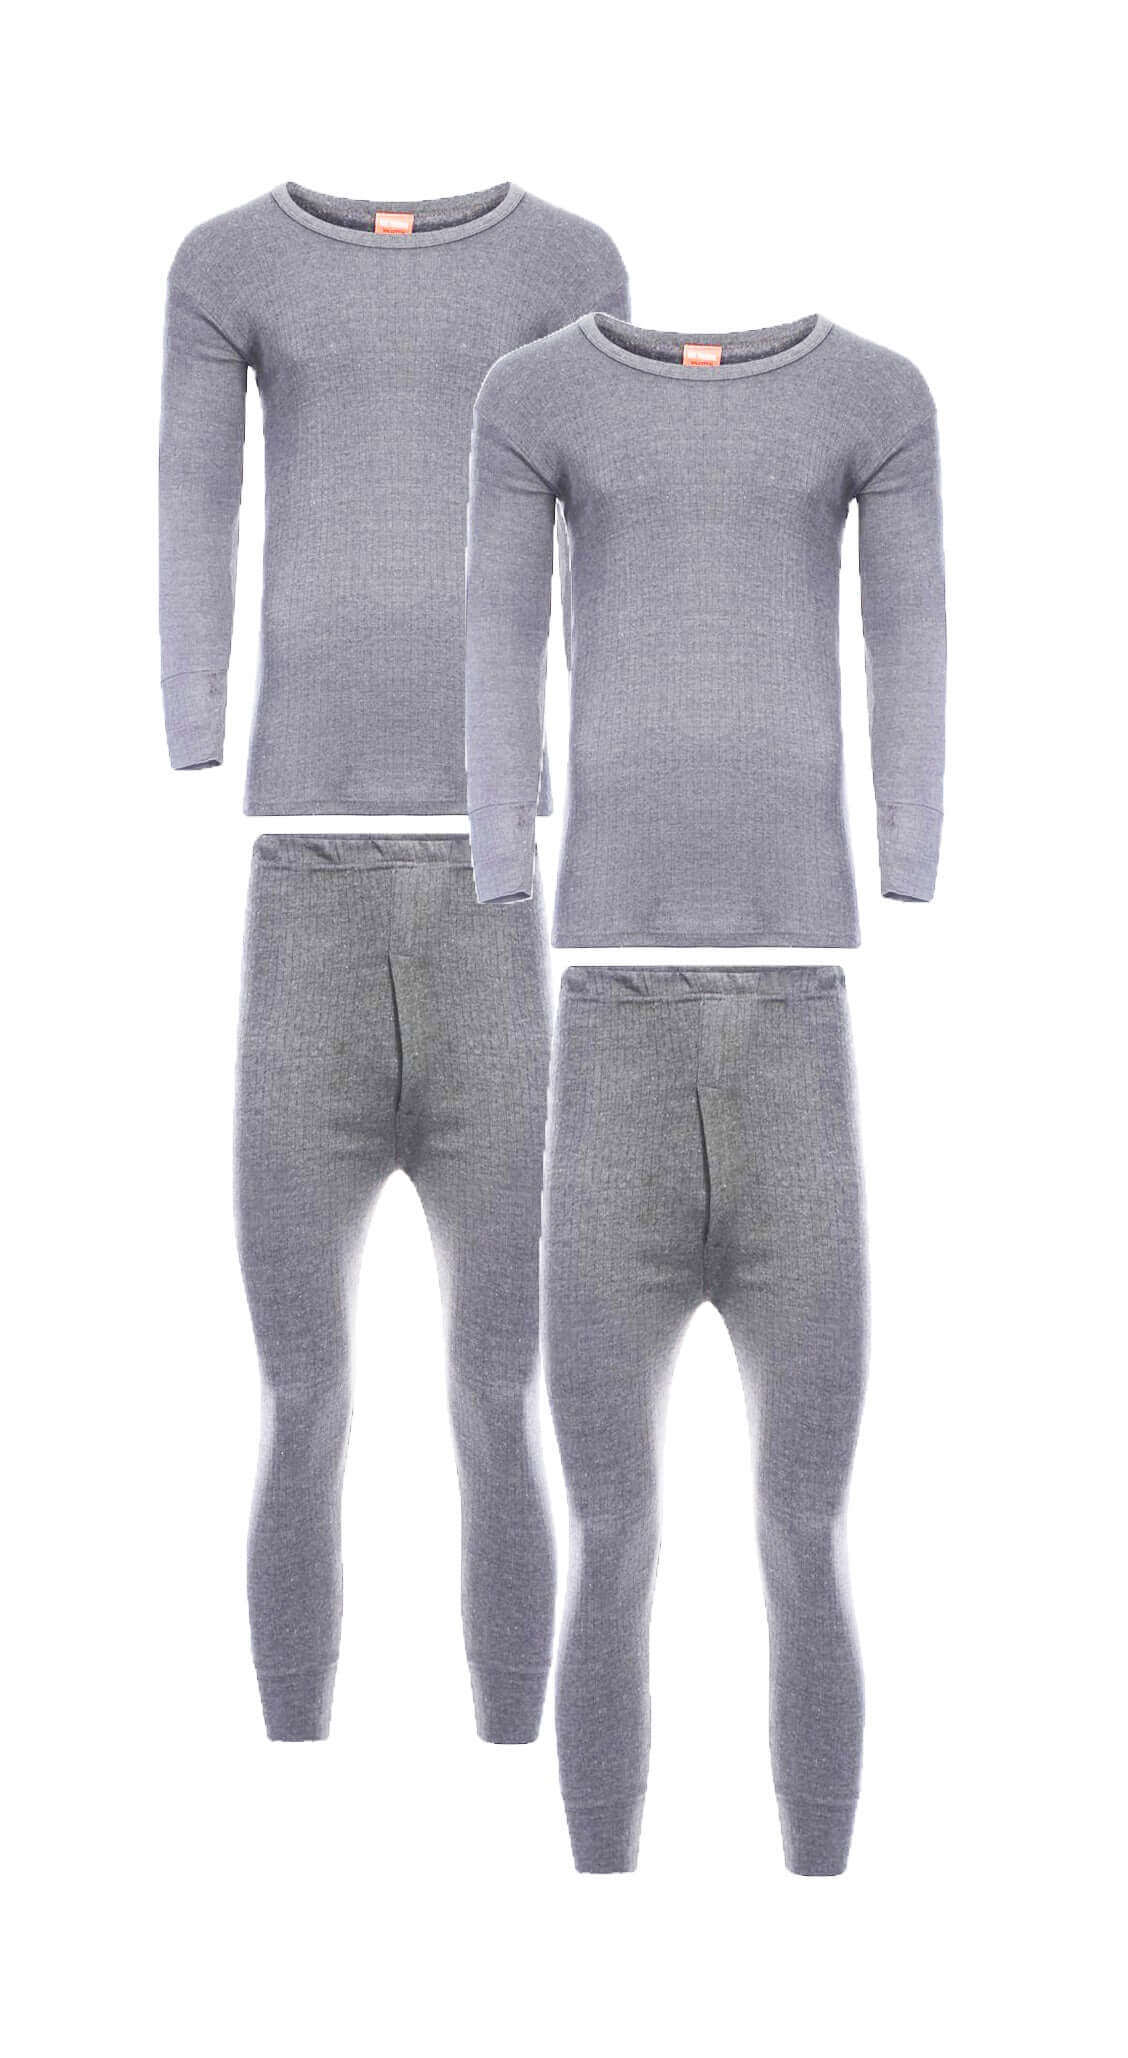 Heatwave® Pack of 2 Men's Thermal Underwear Set, Long Sleeve Top & Long  Johns Set. Buy Now For £20.00.